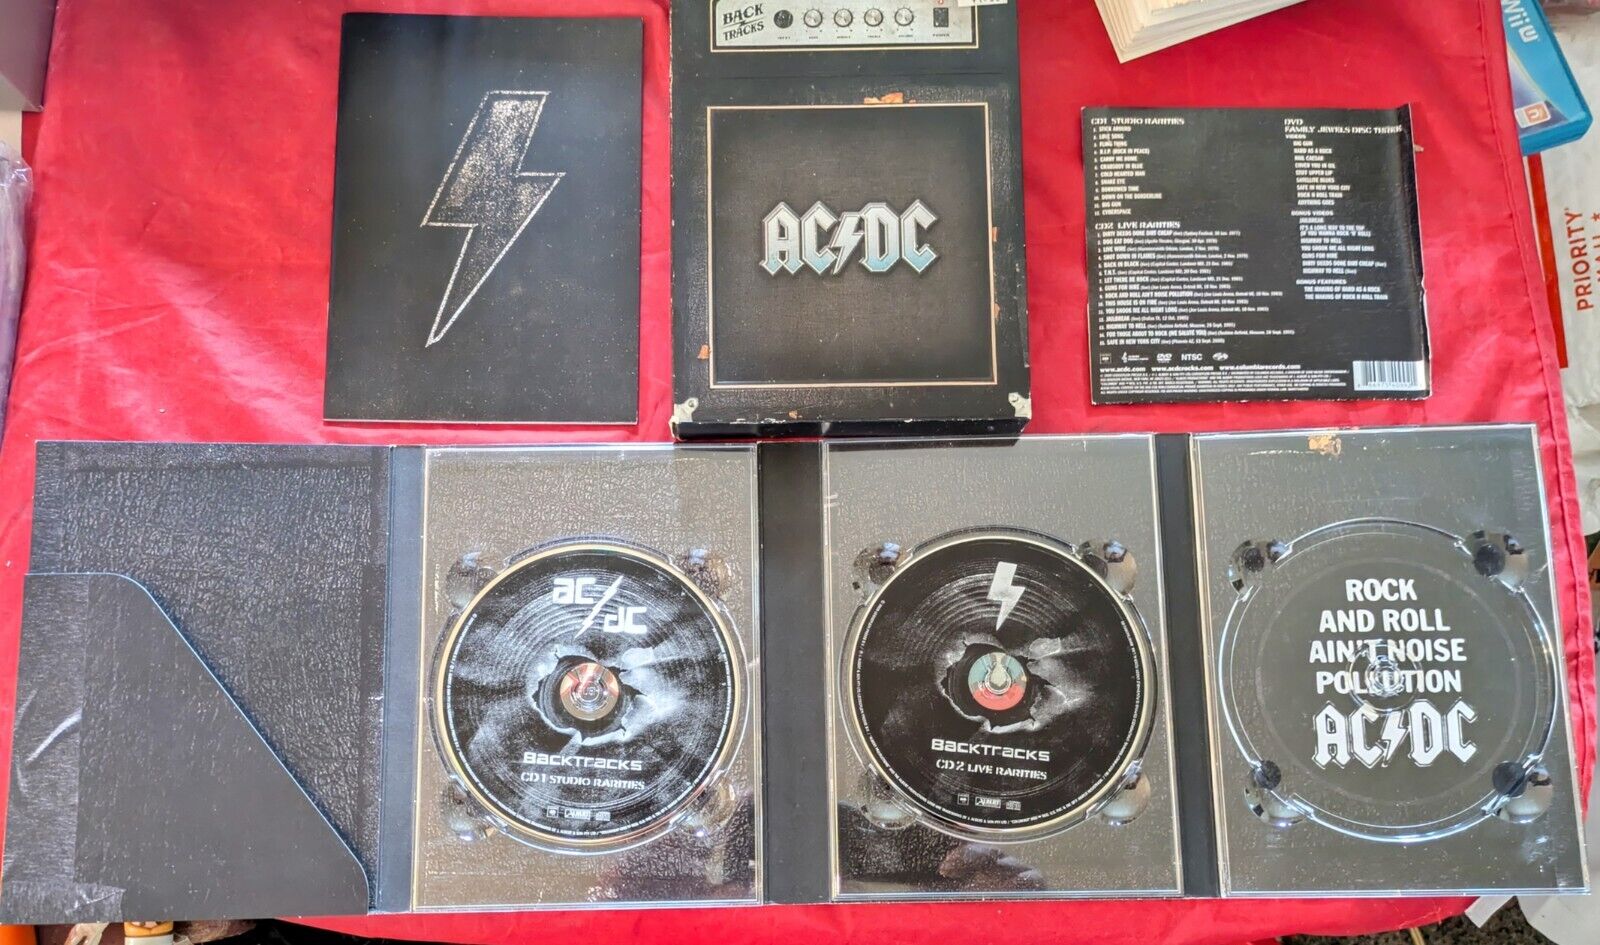 Vtg AC/DC BackTracks CD 2 Disc Box Set 2009 Booklet & CDs are Mint Missing DVD